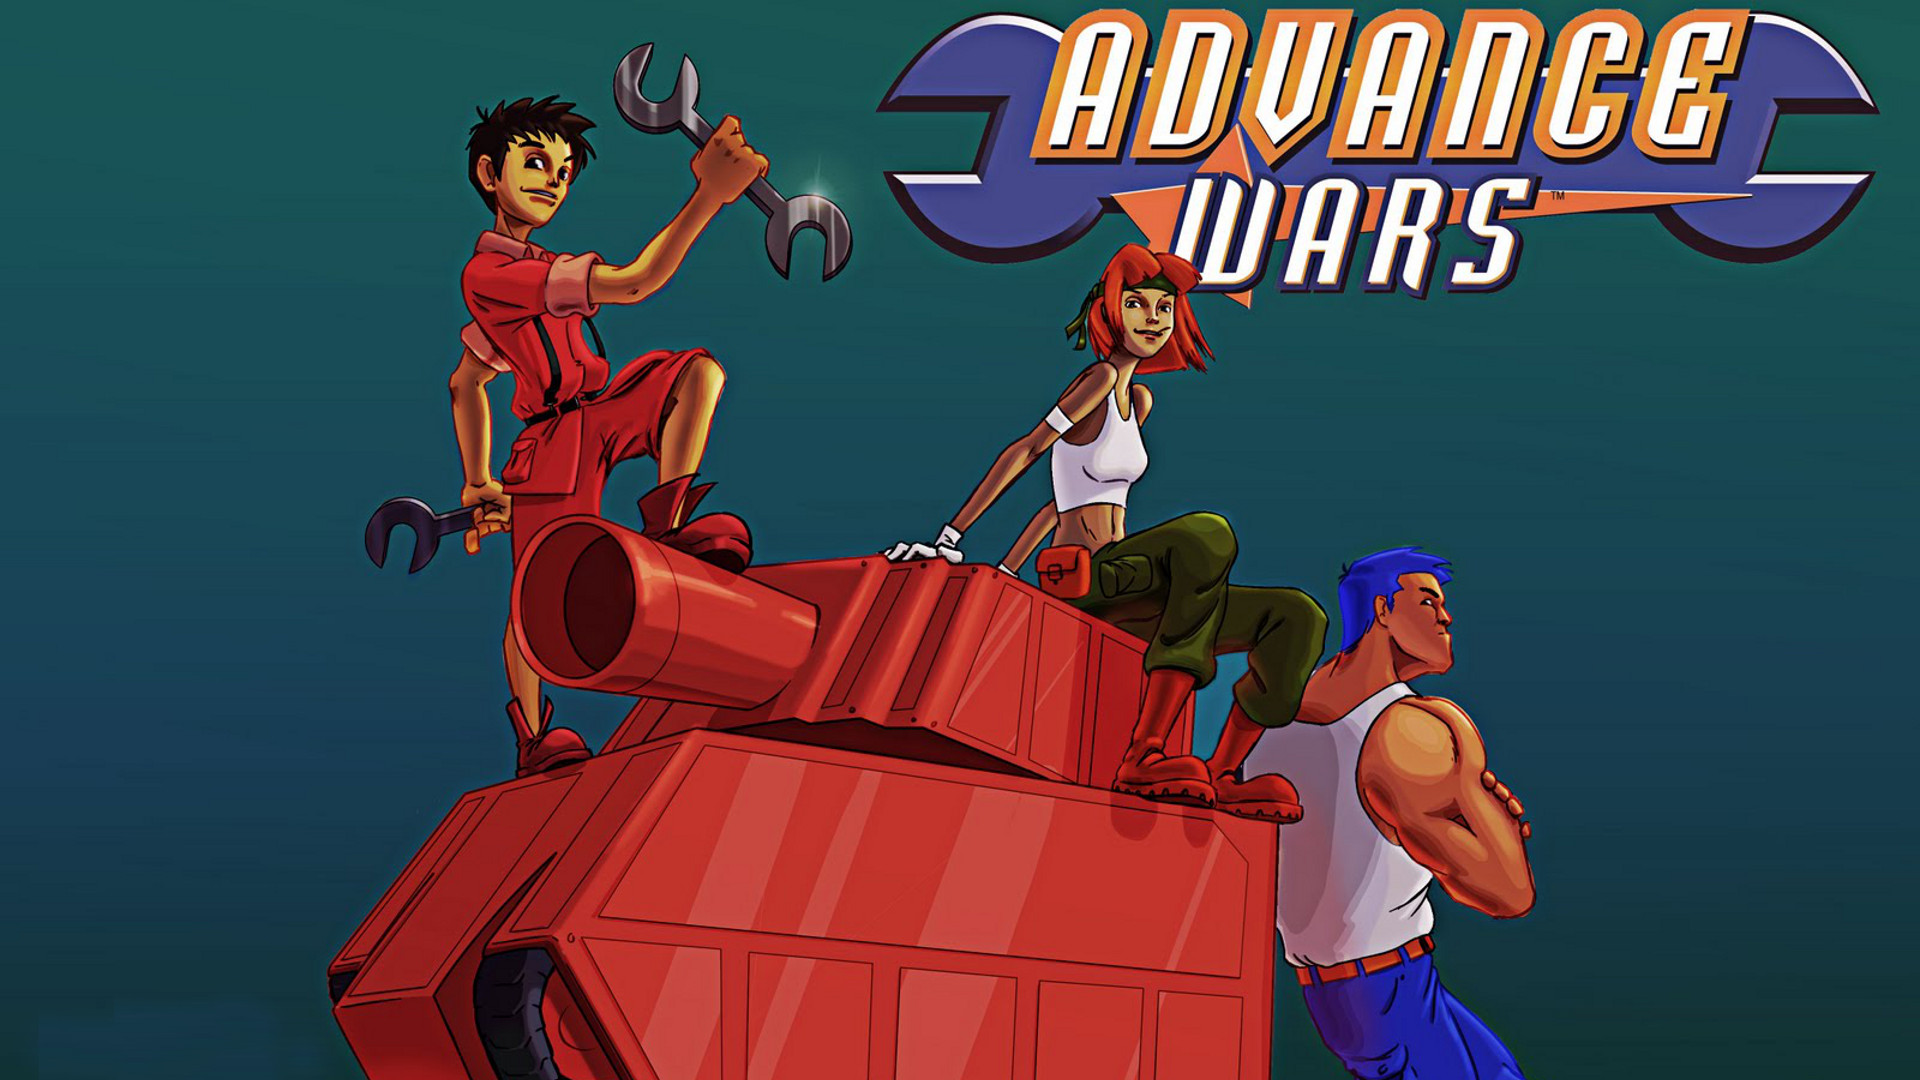 advance wars by web animation